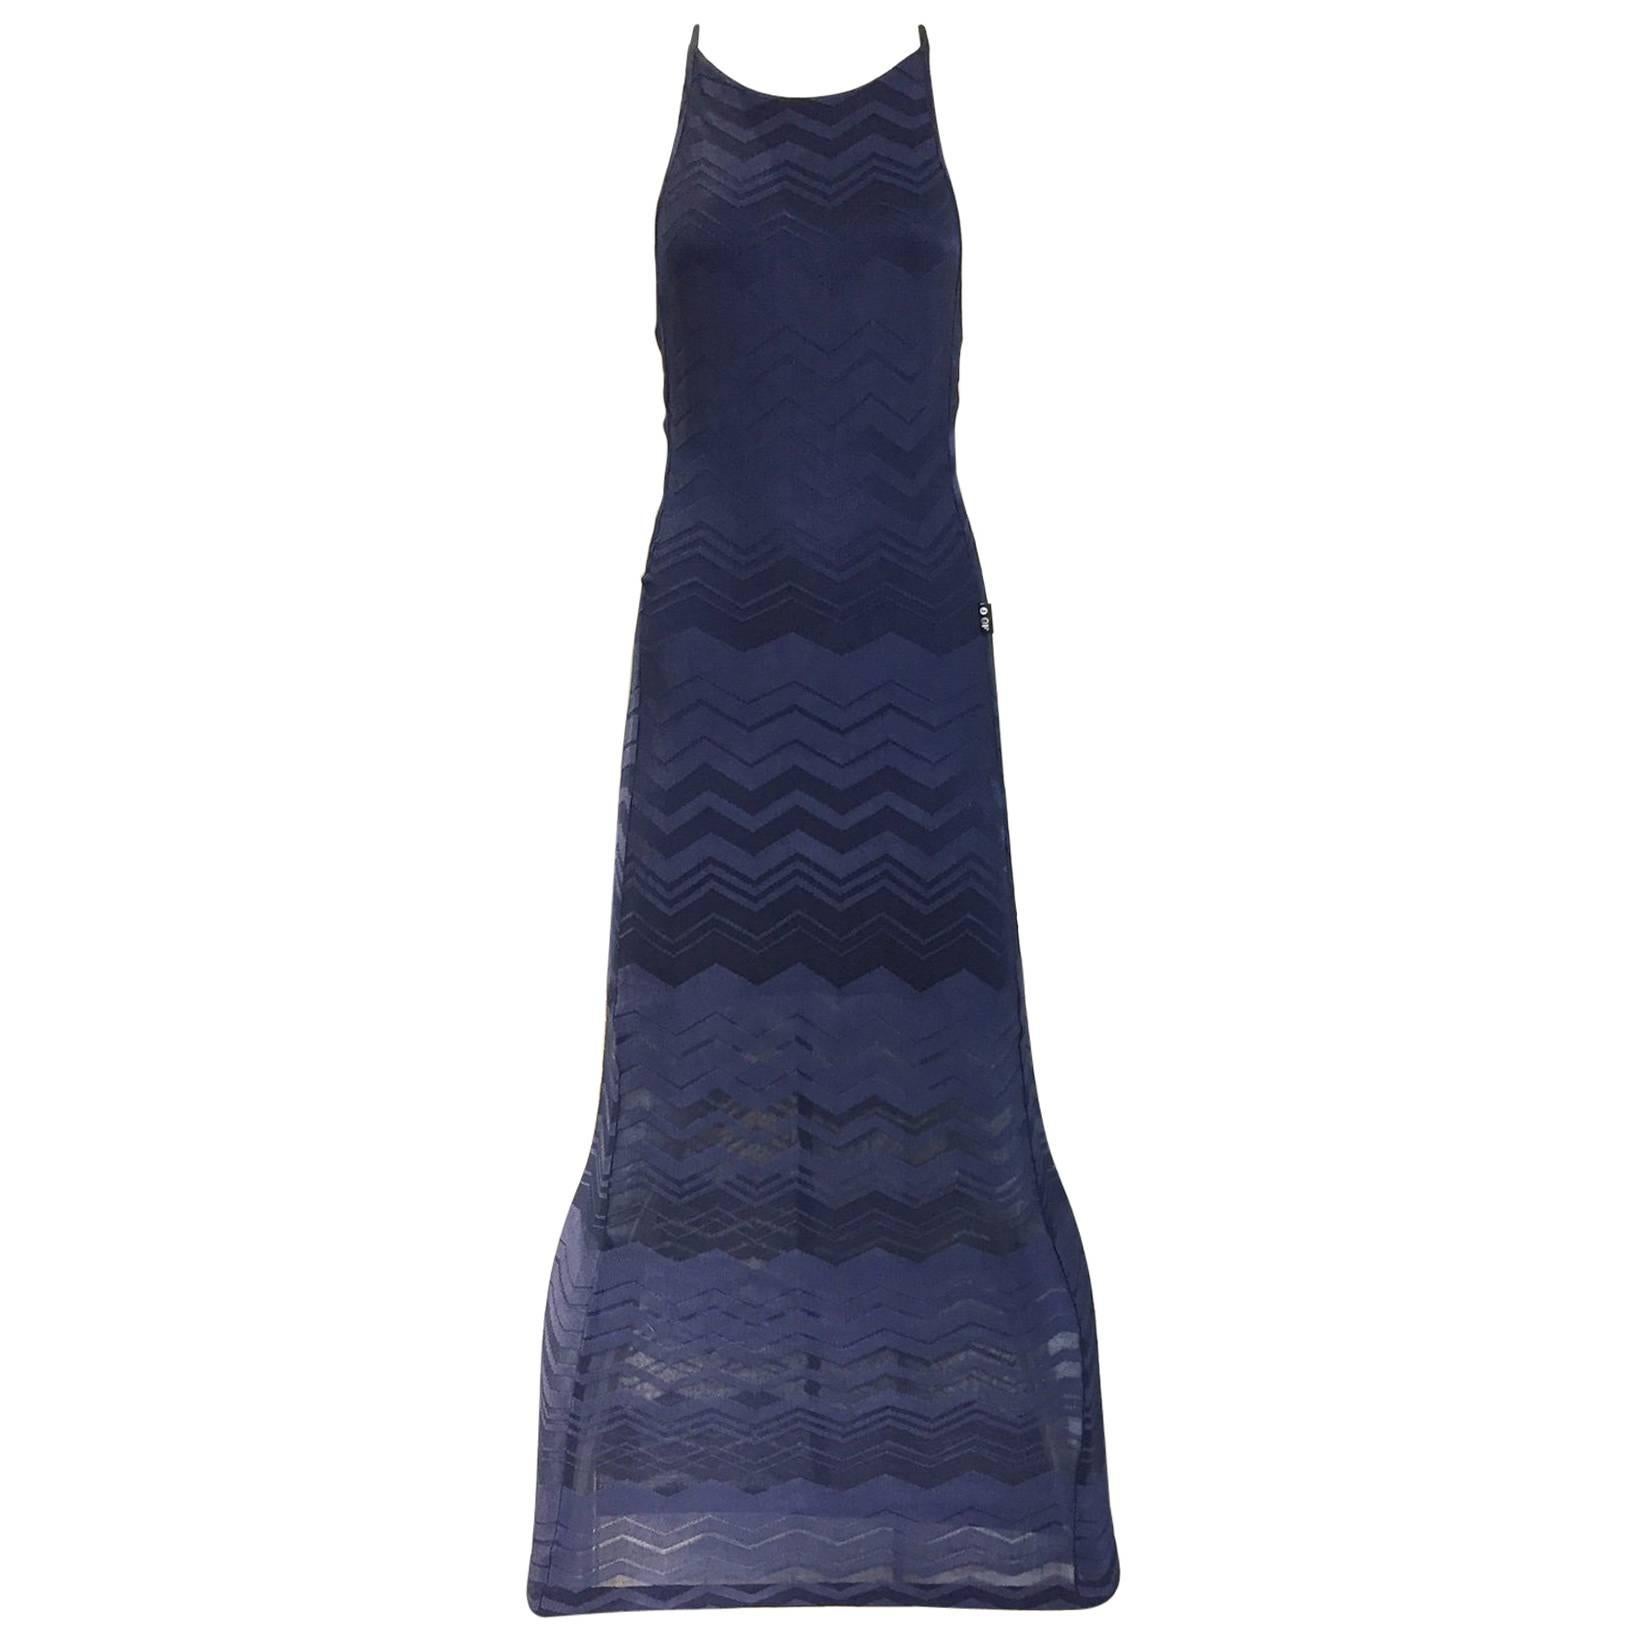 90s Ferre navy blue knit dress For Sale